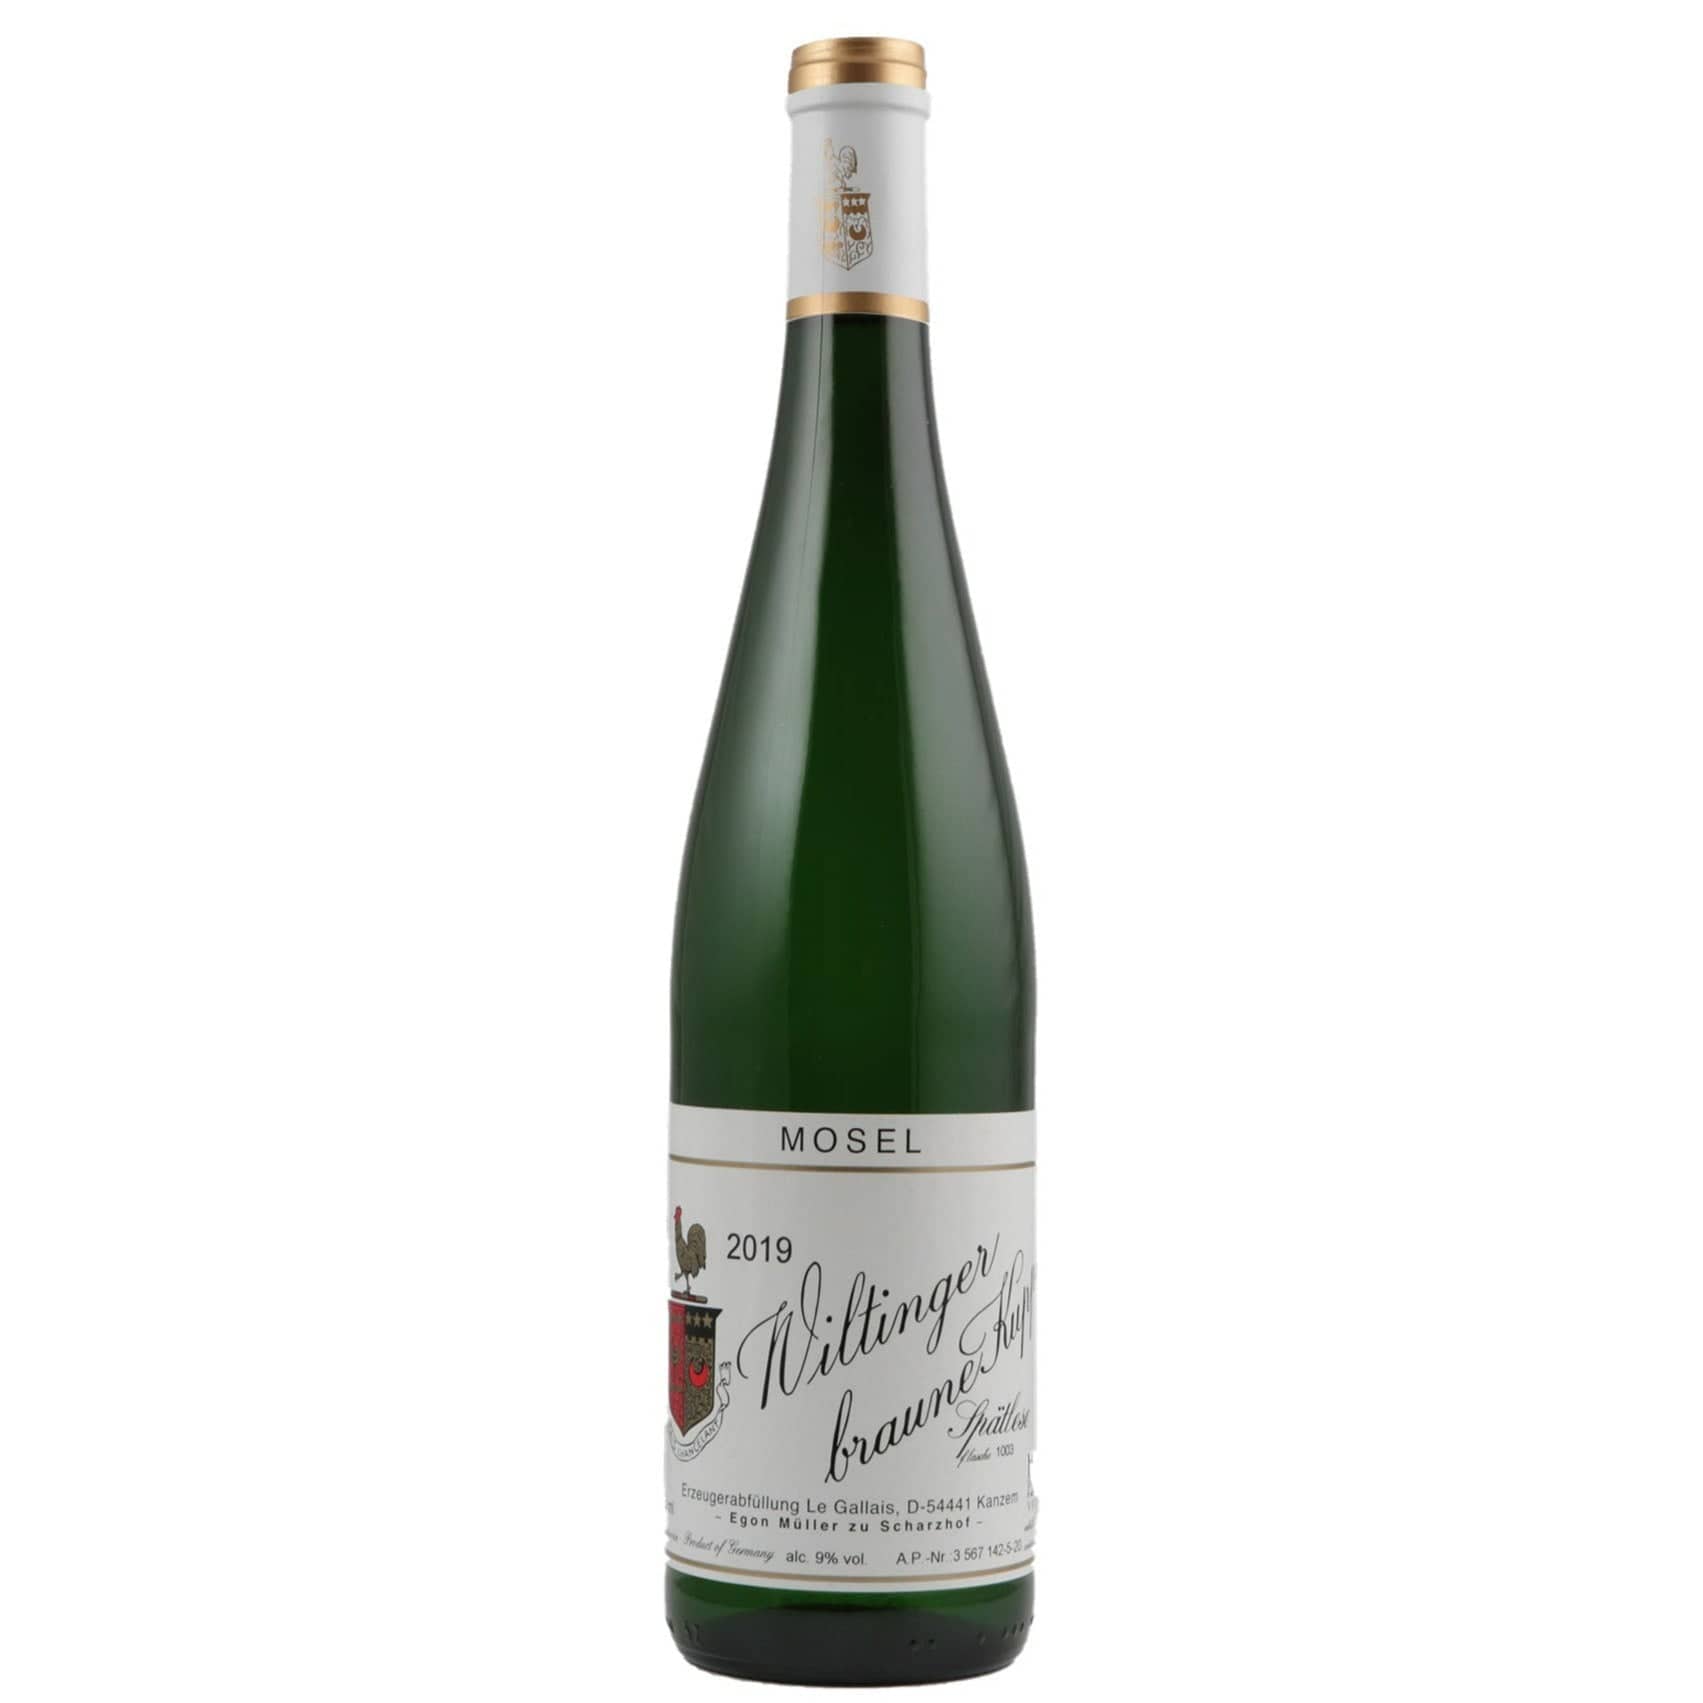 Single bottle of Sweet White wine Egon Muller, Wiltinger Braune Kupp Le Gallais Riesling Spatlese, Wiltingen, 2019 100% Riesling